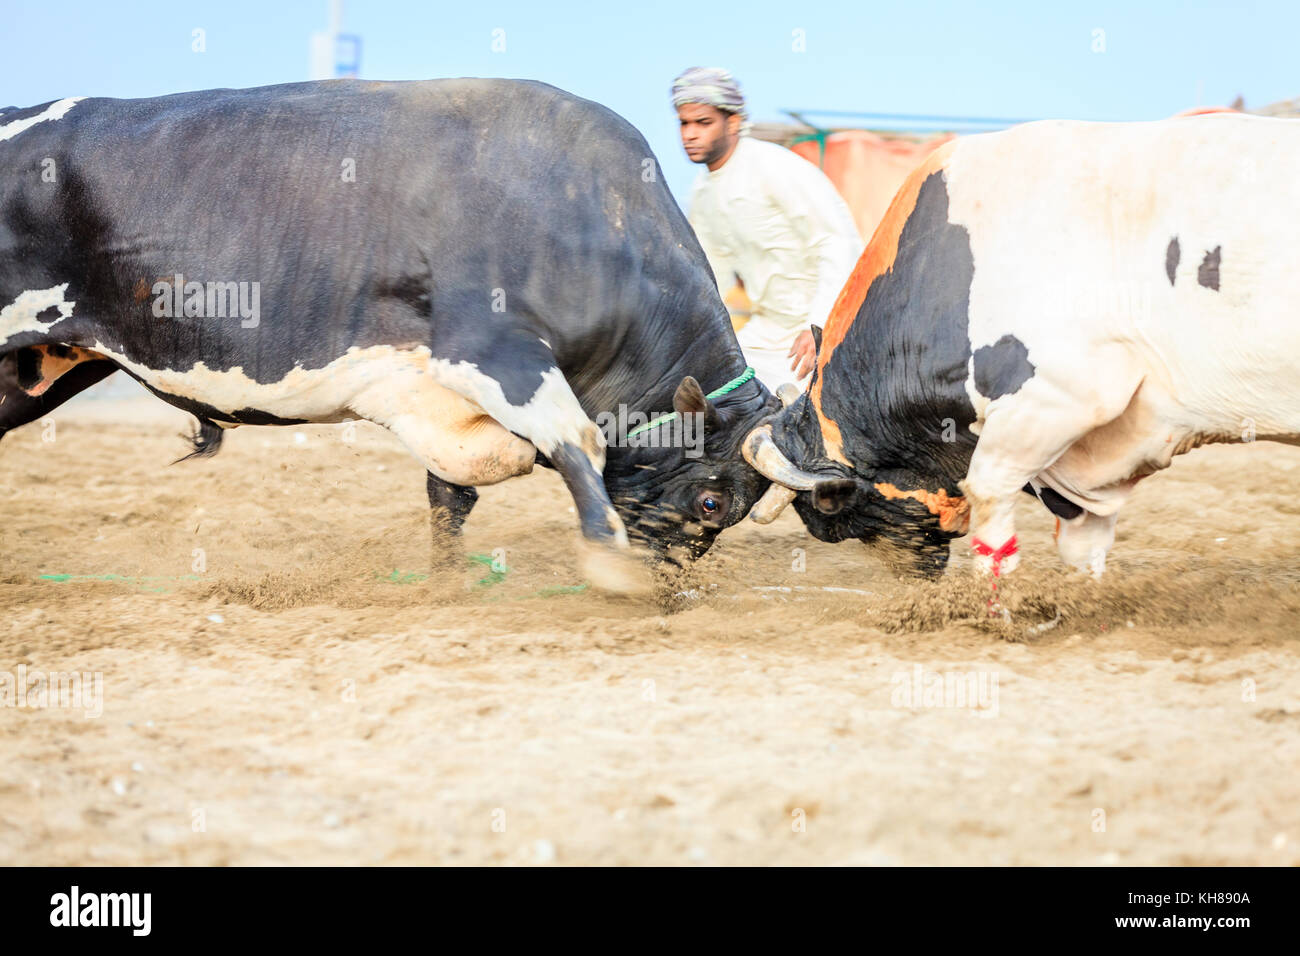 Fujairah, vae, April 1, 2016: Bullen kämpfen in eine traditionelle Veranstaltung in Fujairah, VAE Stockfoto